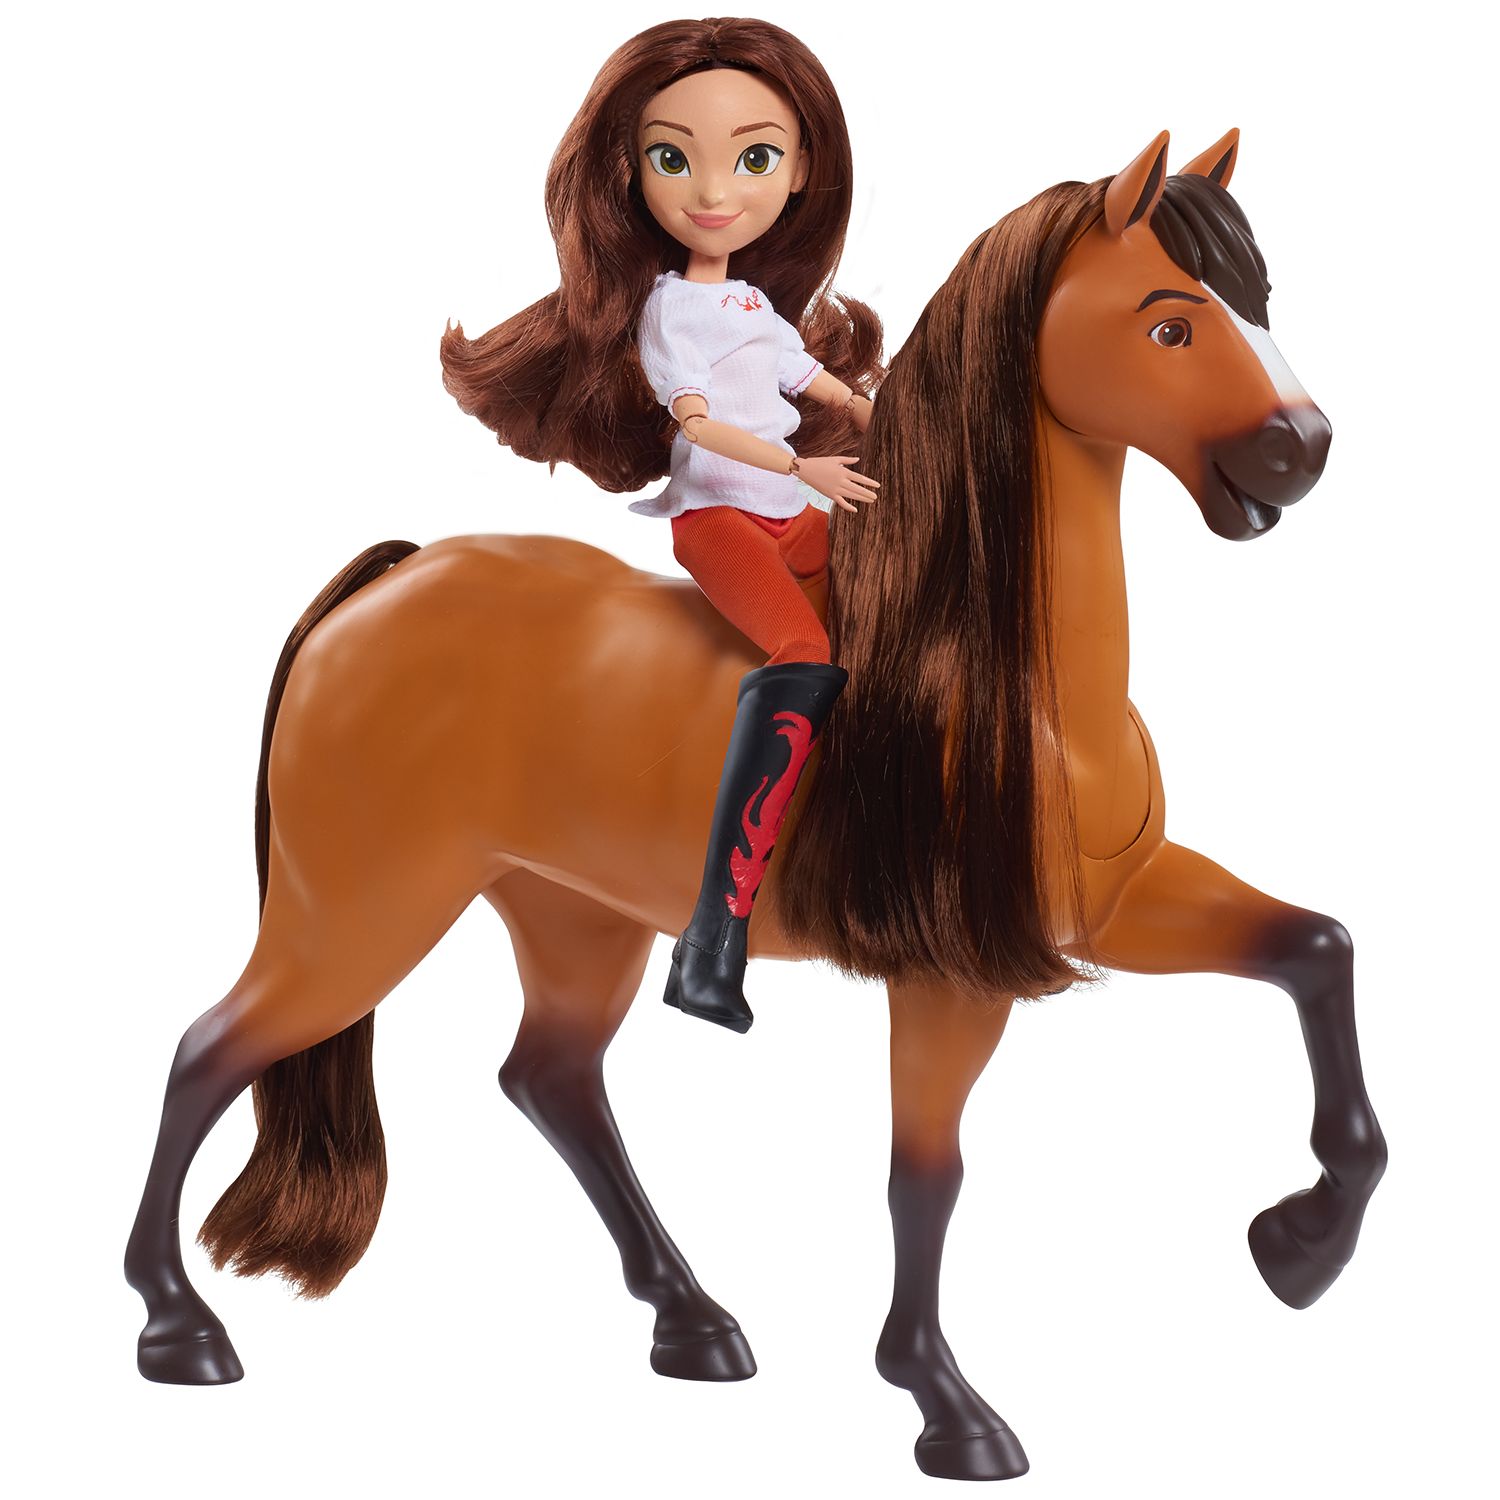 spirit horse and dolls multipack